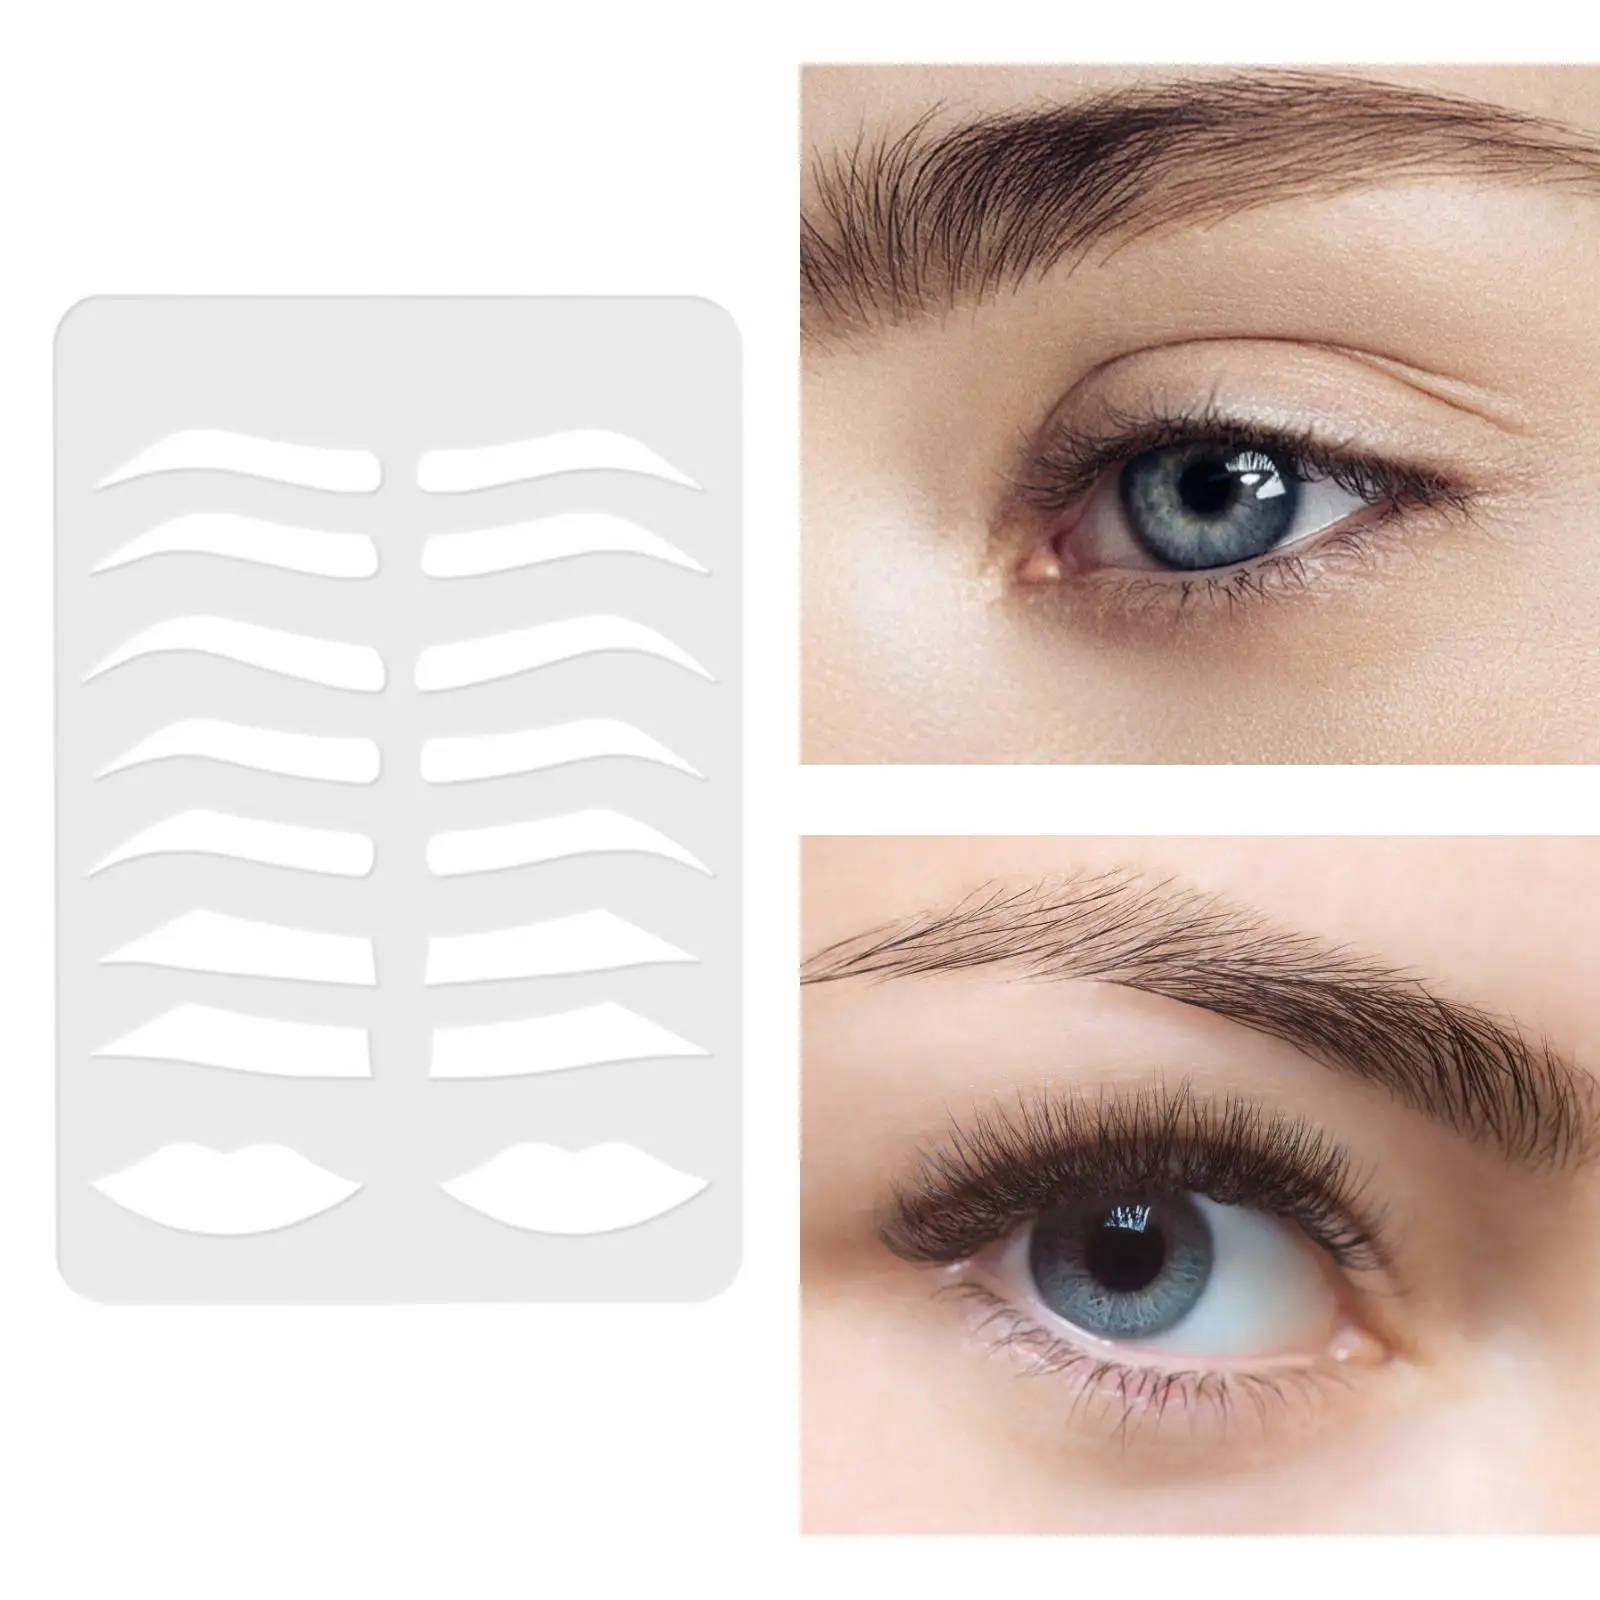 Eyebrow Practice Template Reusable 3 Minutes Makeup Ruler Acrylic Lip Shape Model Brow Stencil for DIY Grooming Makeup Beginner